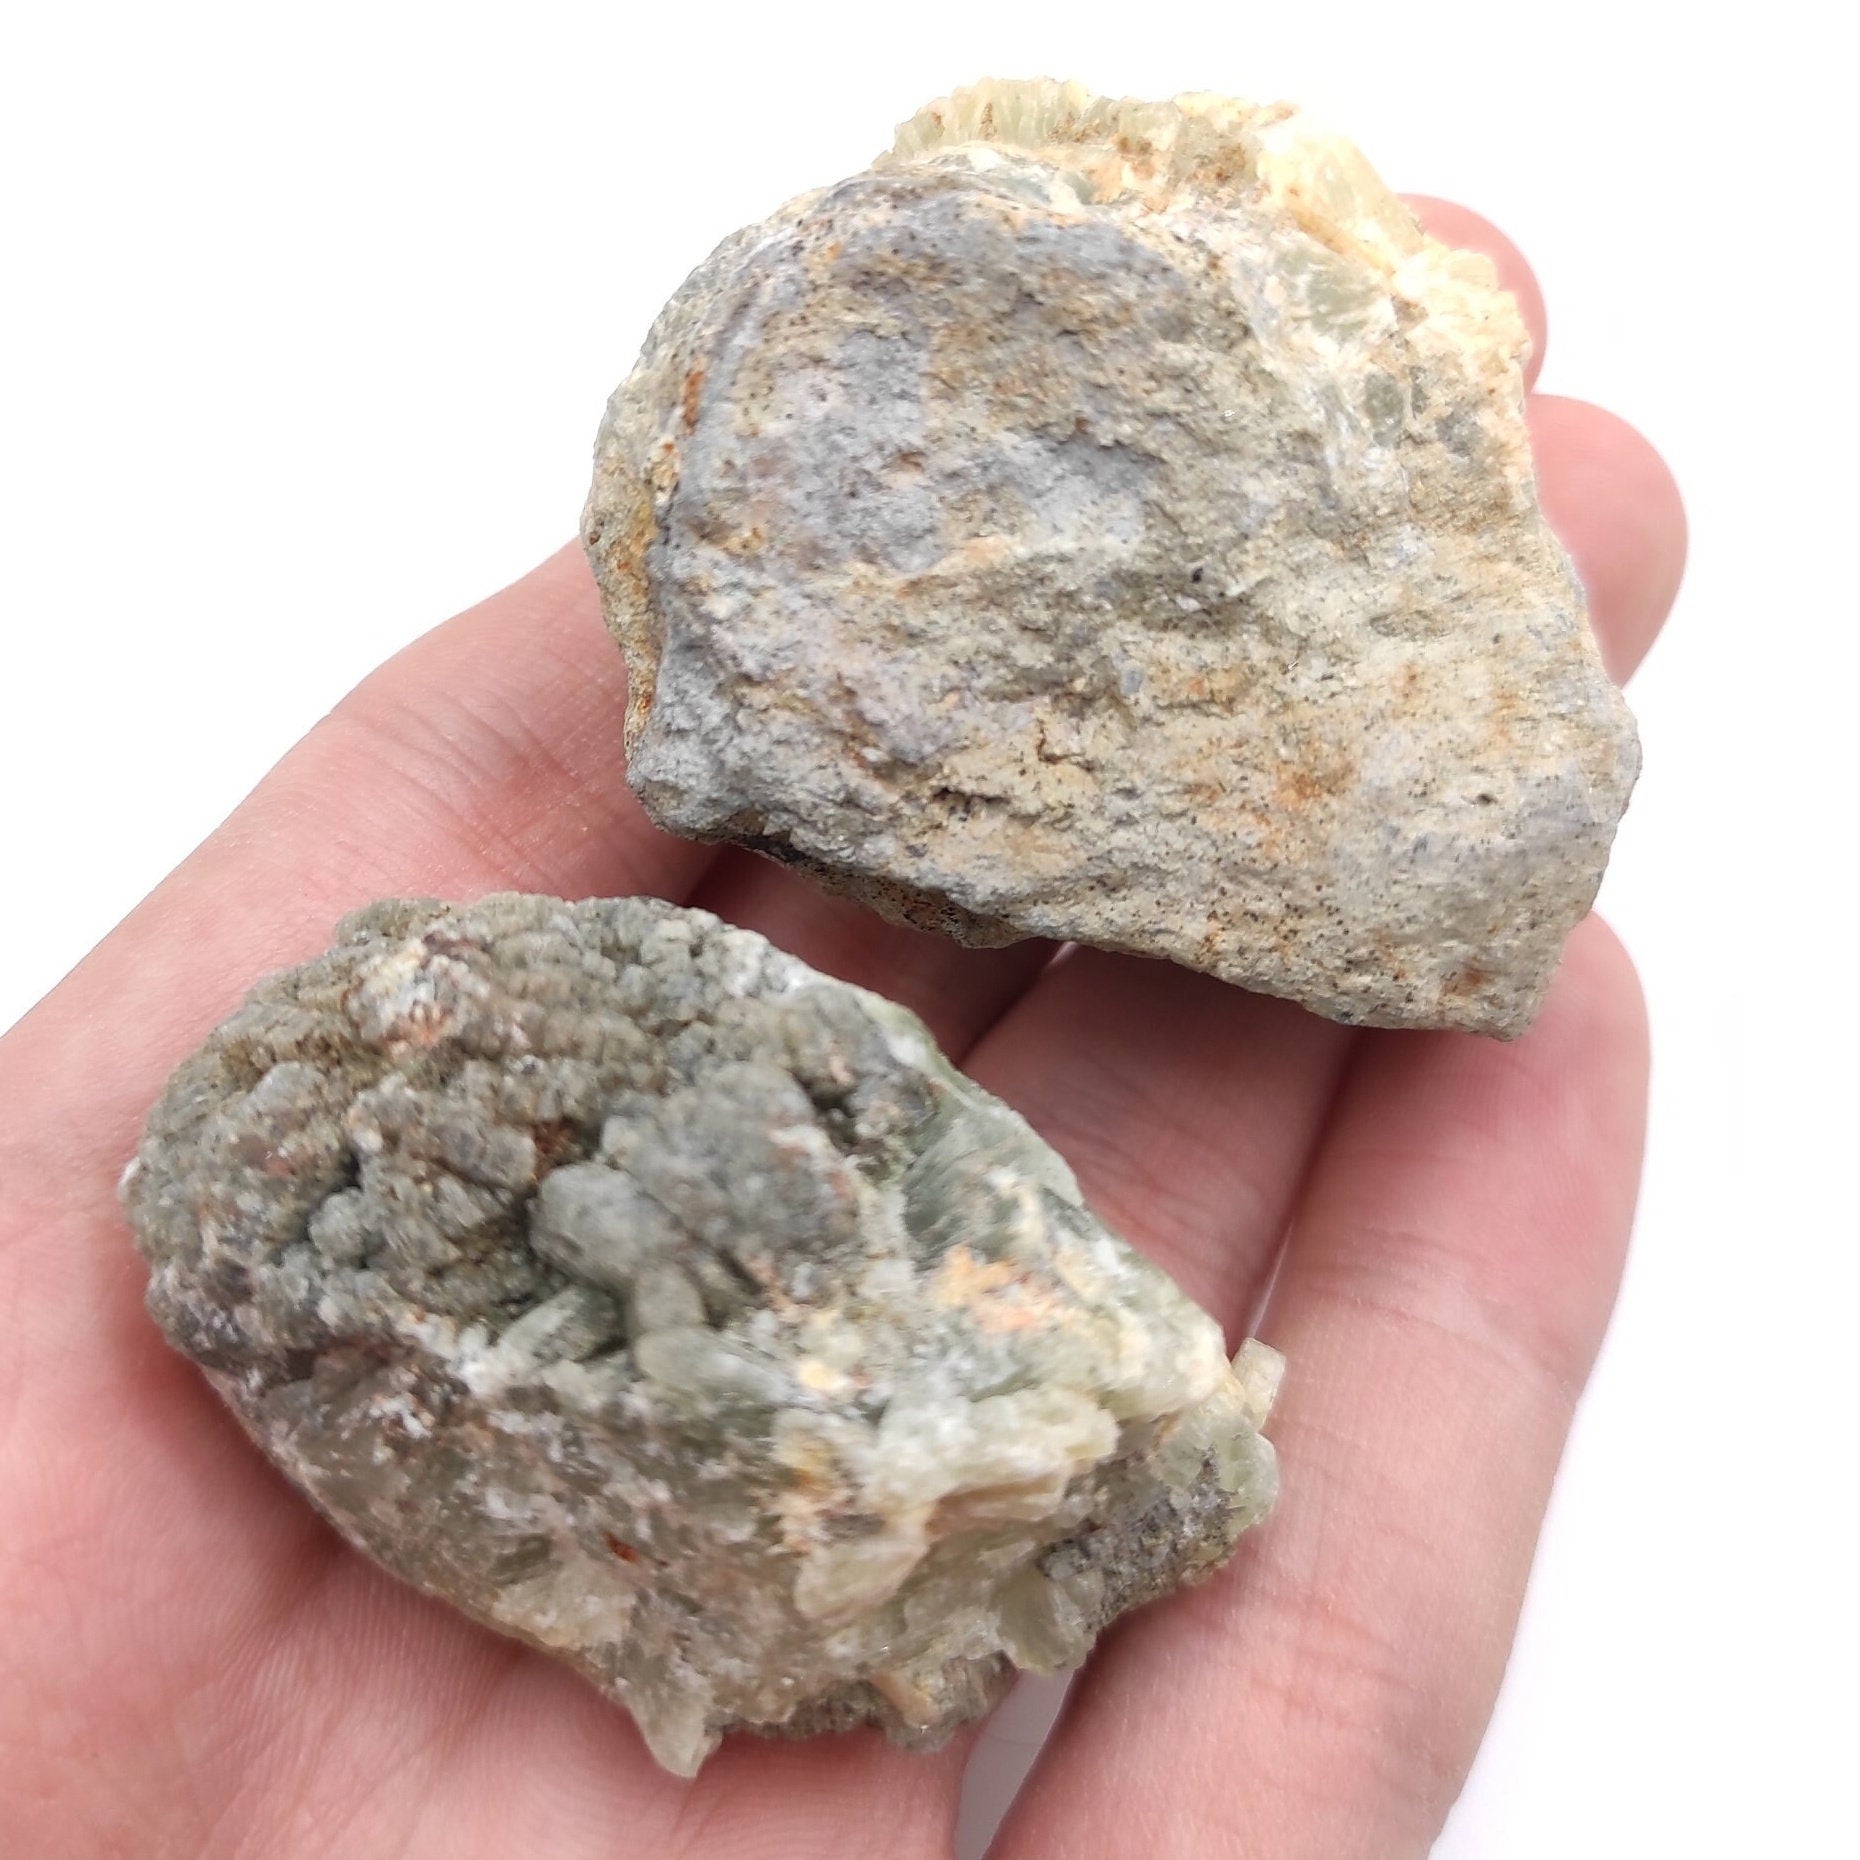 120g (2pcs) Prehnite Lot - Raw Prehnite Crystals from Midelt Province, Morocco - Natural Prehnite Minerals - Rough Prehnite Stone Set